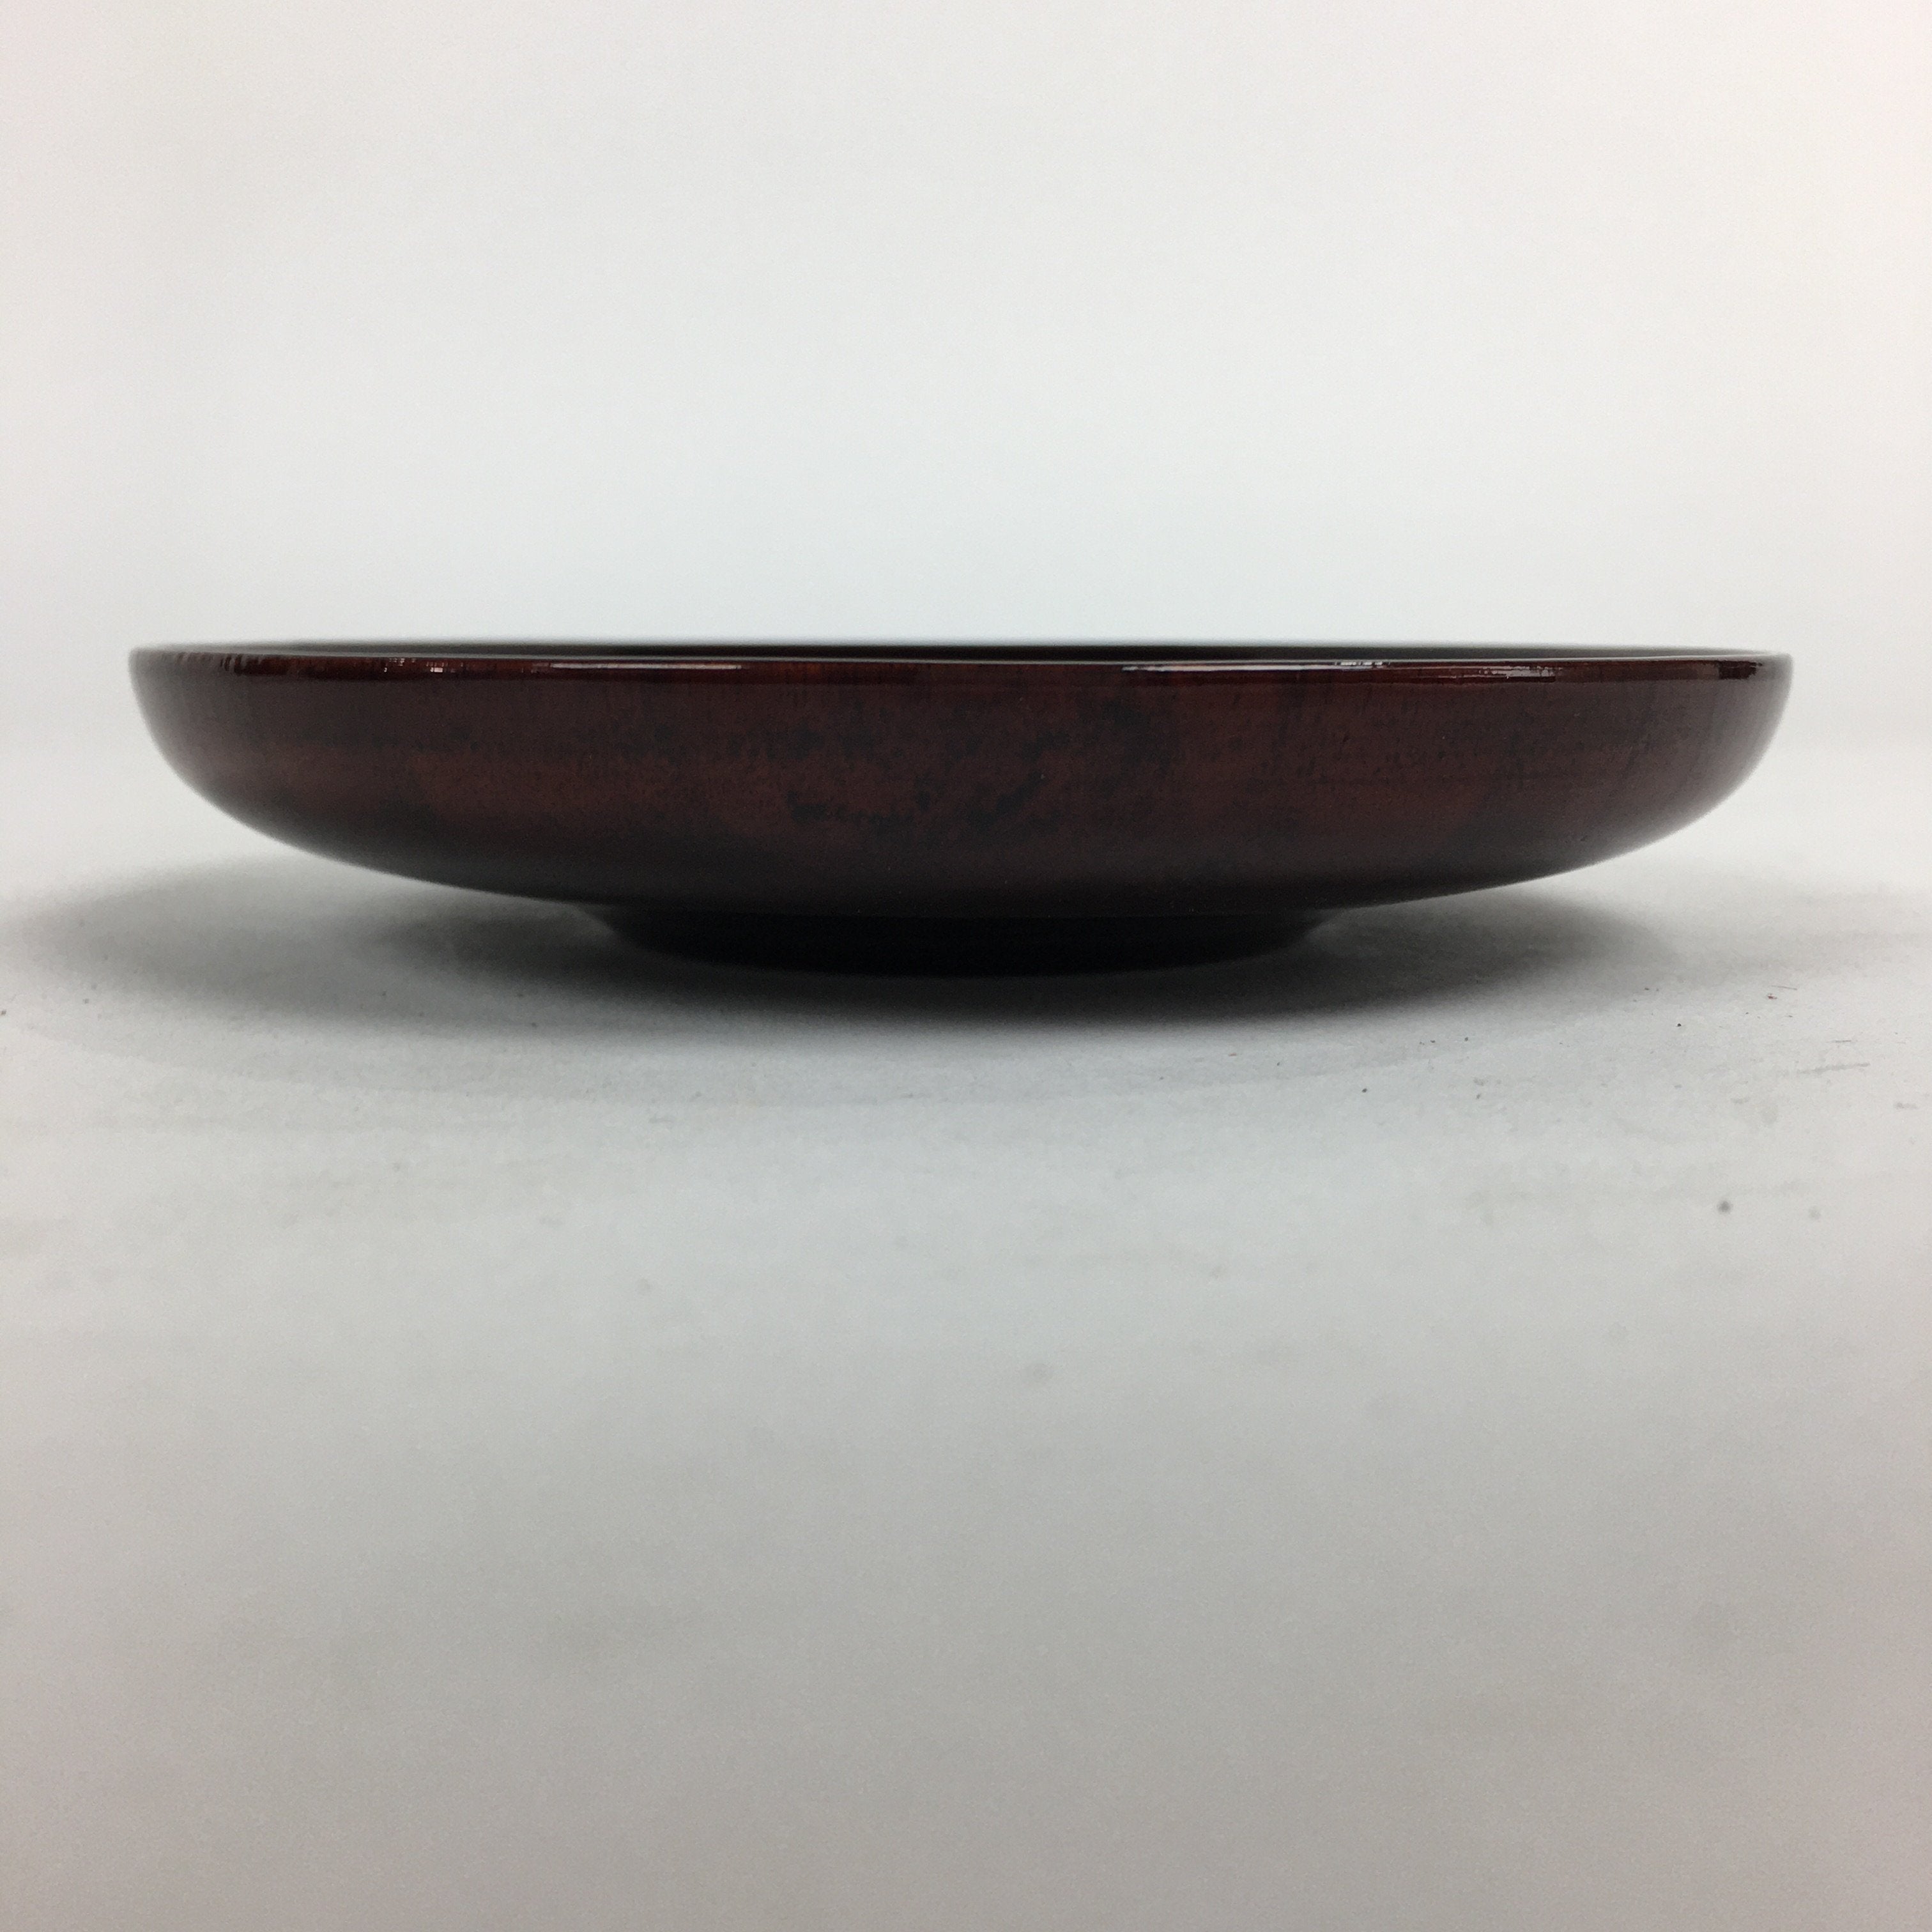 Japanese Wood Lacquer Drink Saucer 5pc Set Vtg Chataku Coaster Reddish-brown UR5